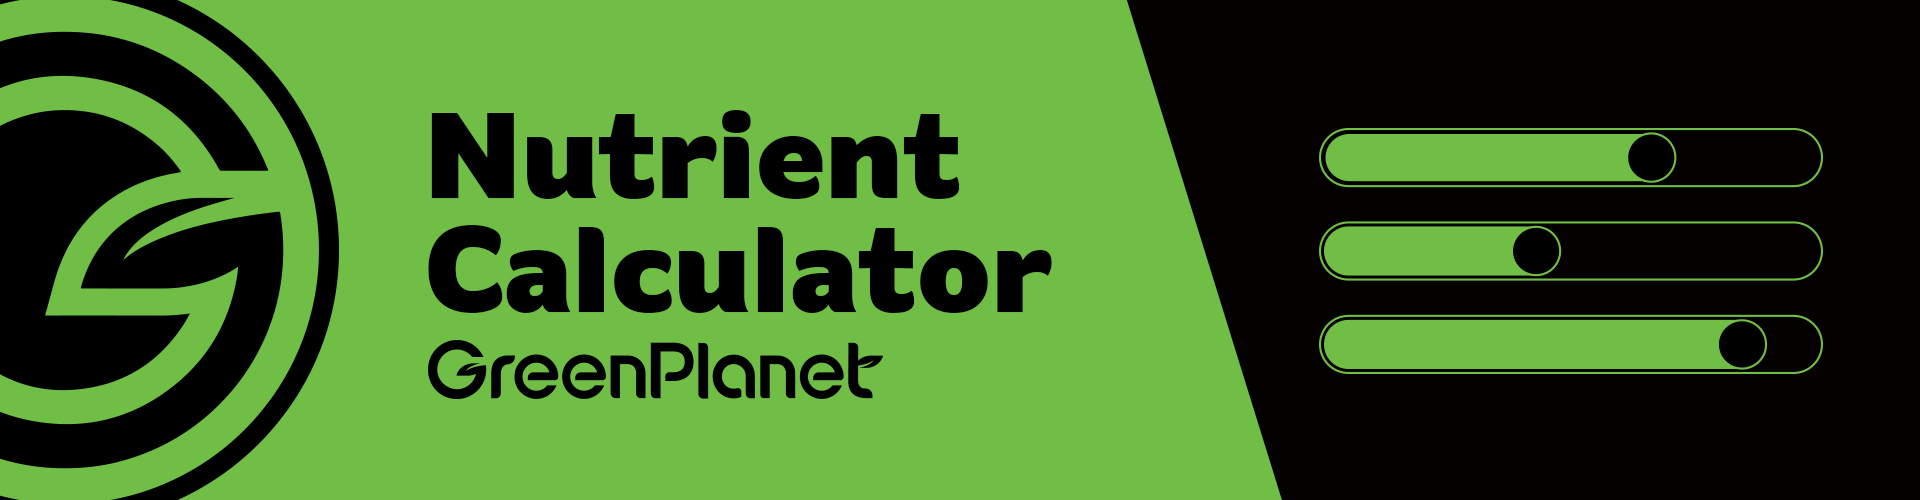 GreenPlanet Nutrient Calculator